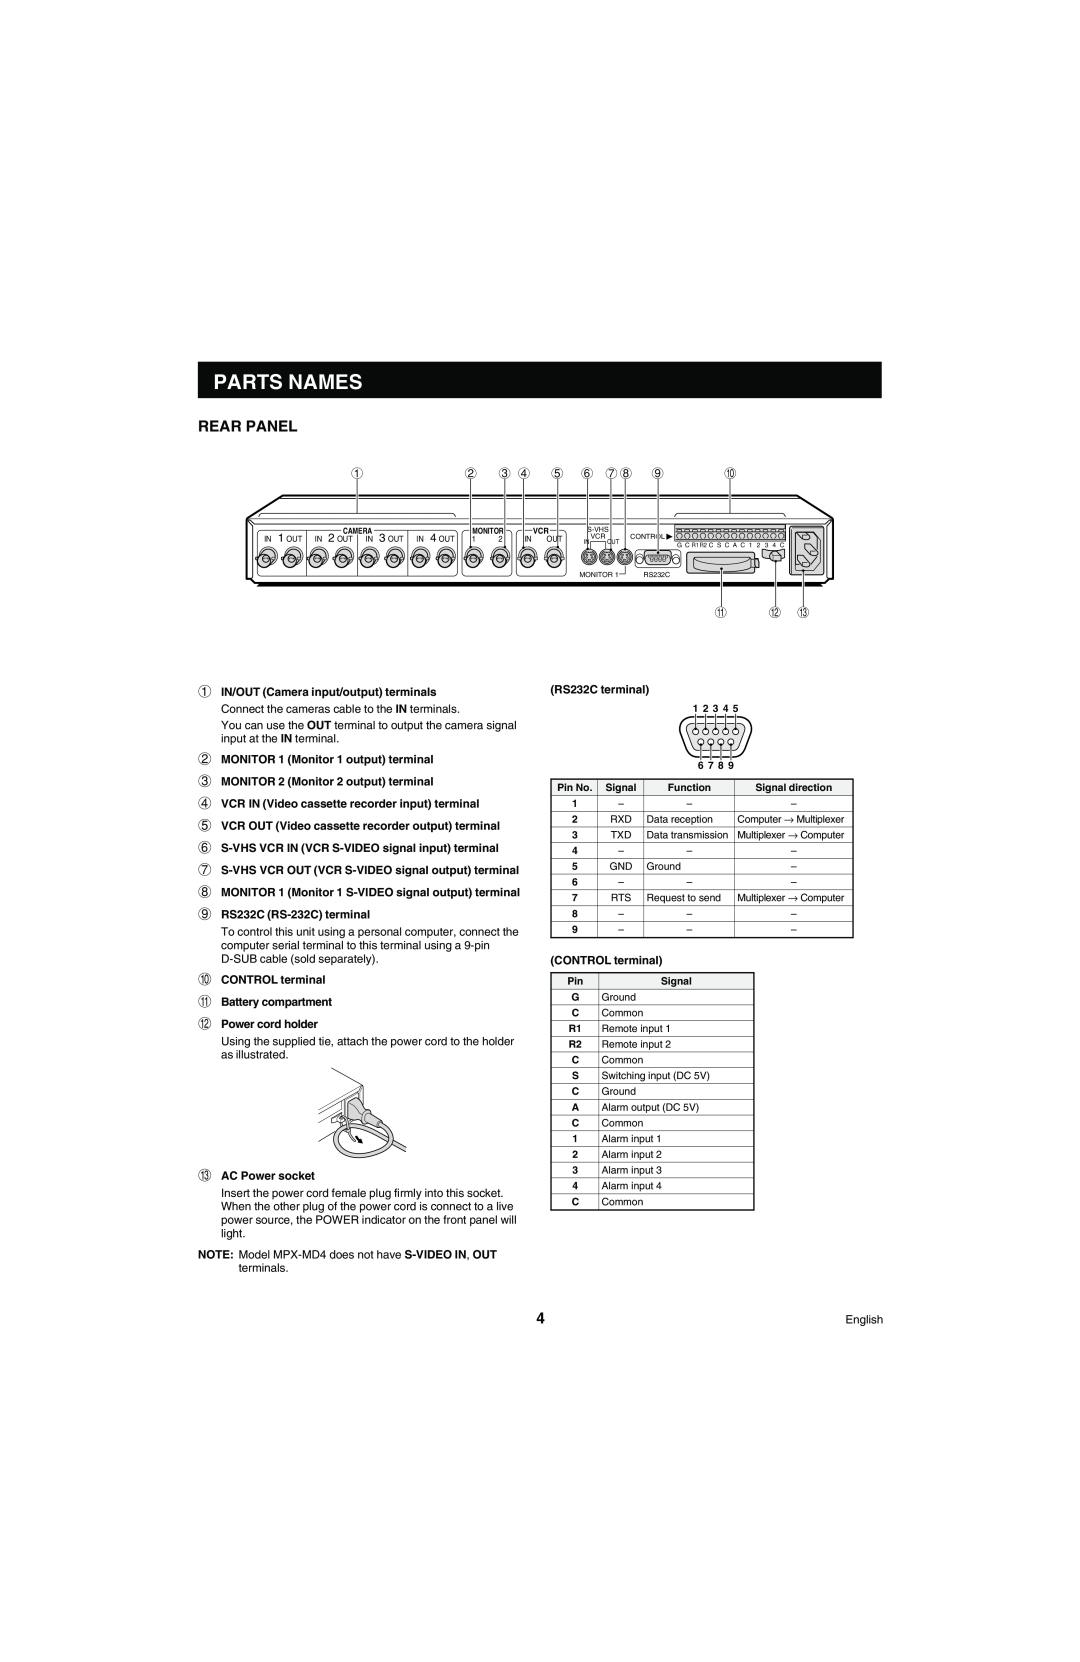 Sanyo MPX-MD4 instruction manual Parts Names, Rear Panel 